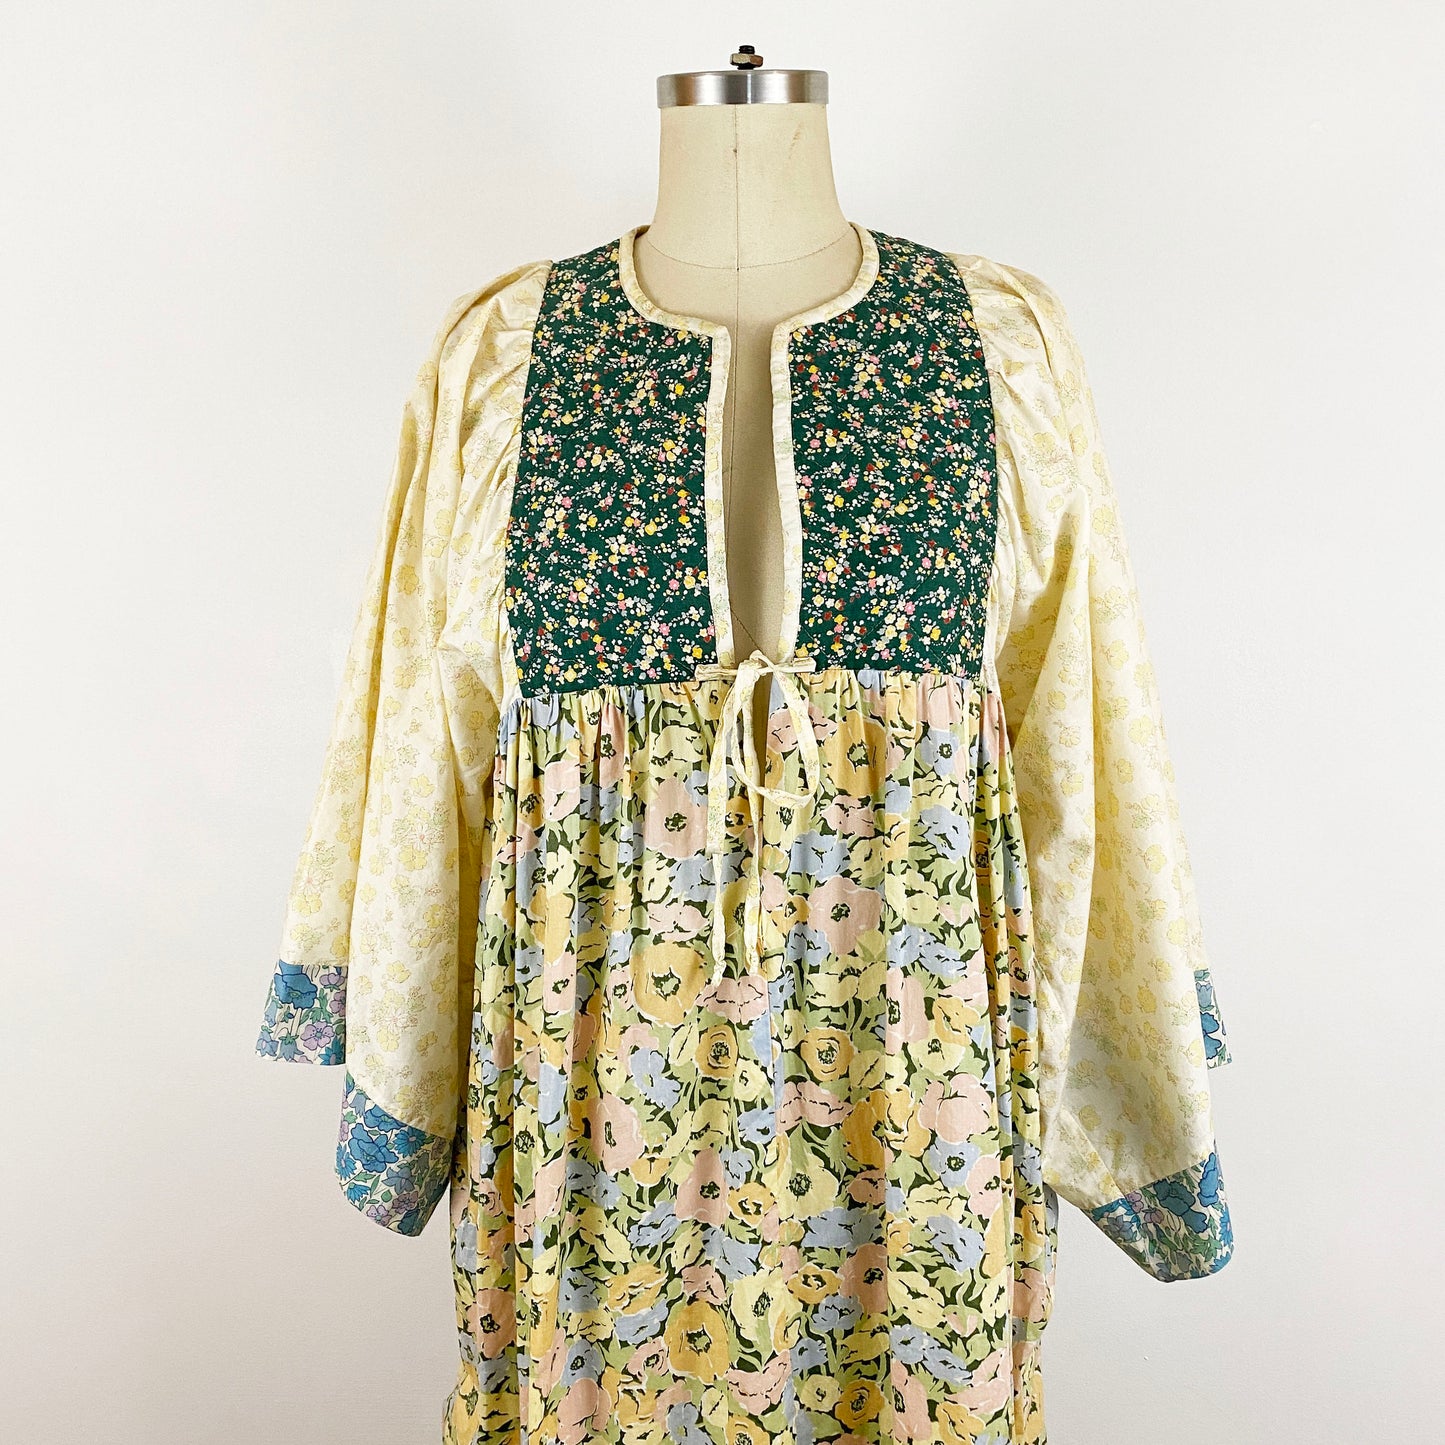 1970s Quilted Pastel Liberty of London Floral Cotton Kaftan Dress Boho Maxi Hippie Caftan British Cottagecore Romantic Fairy / Small/Medium